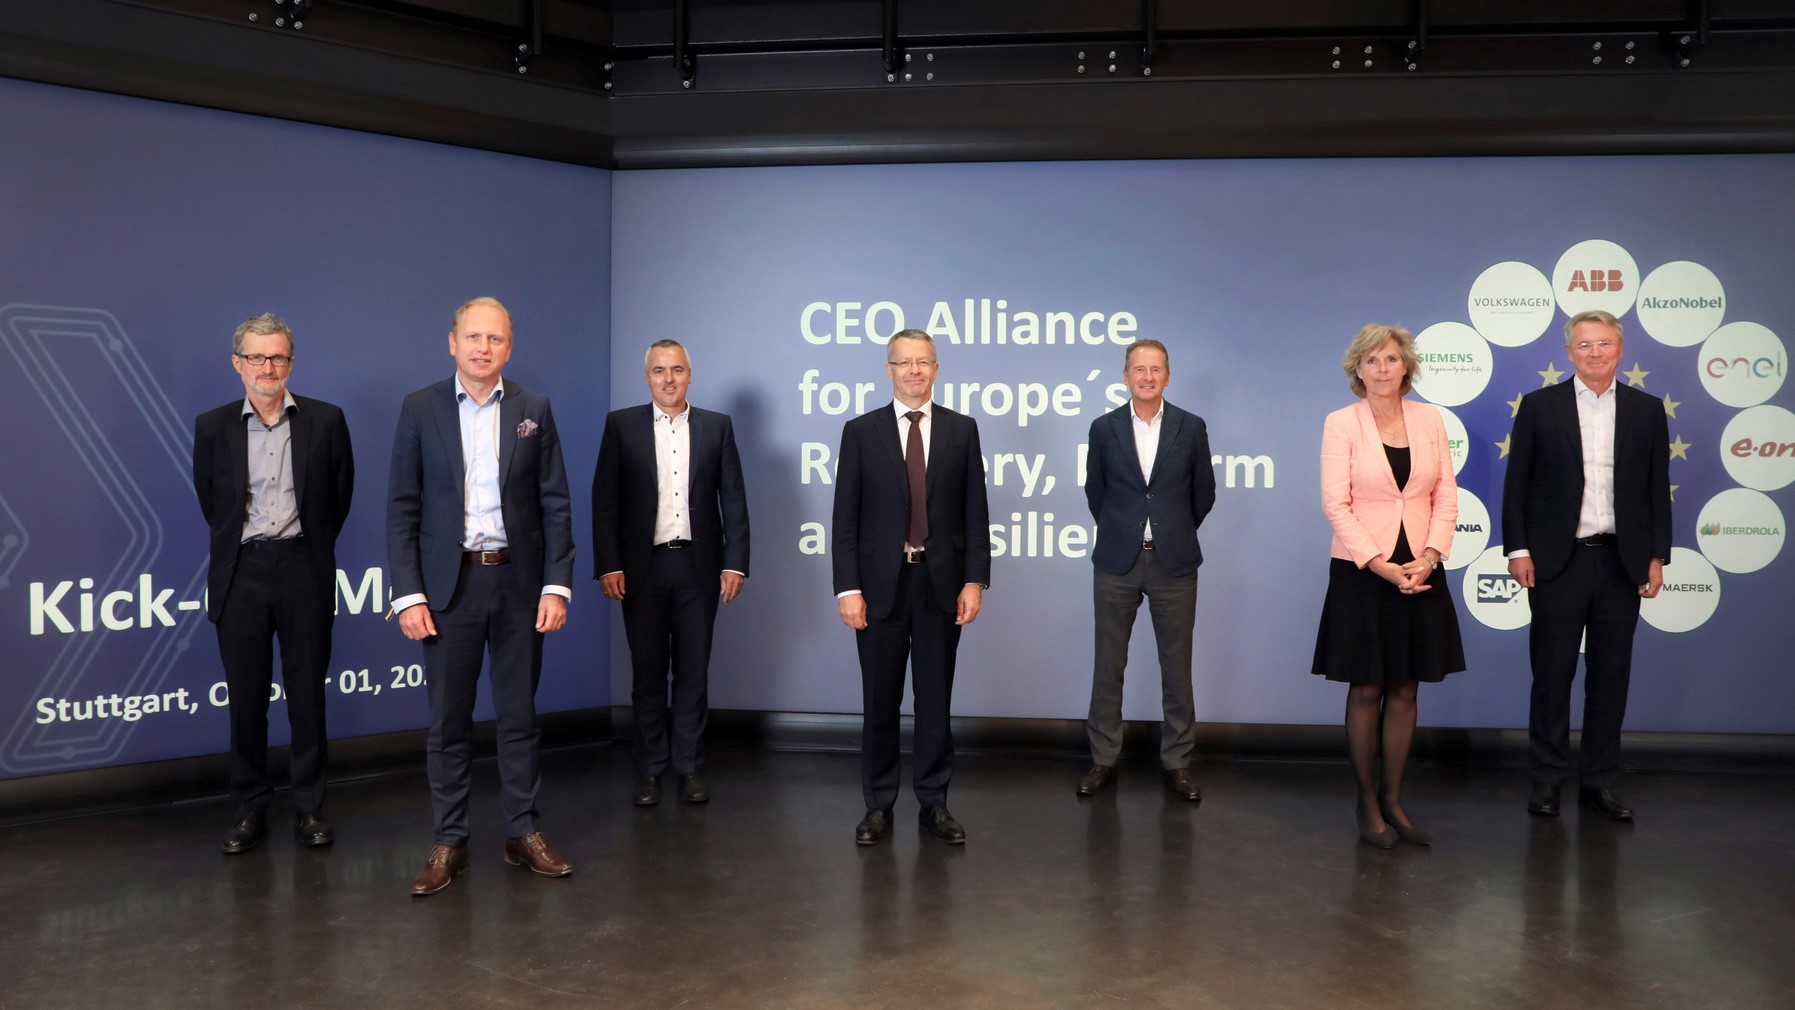 CEO Alliance representatives standing